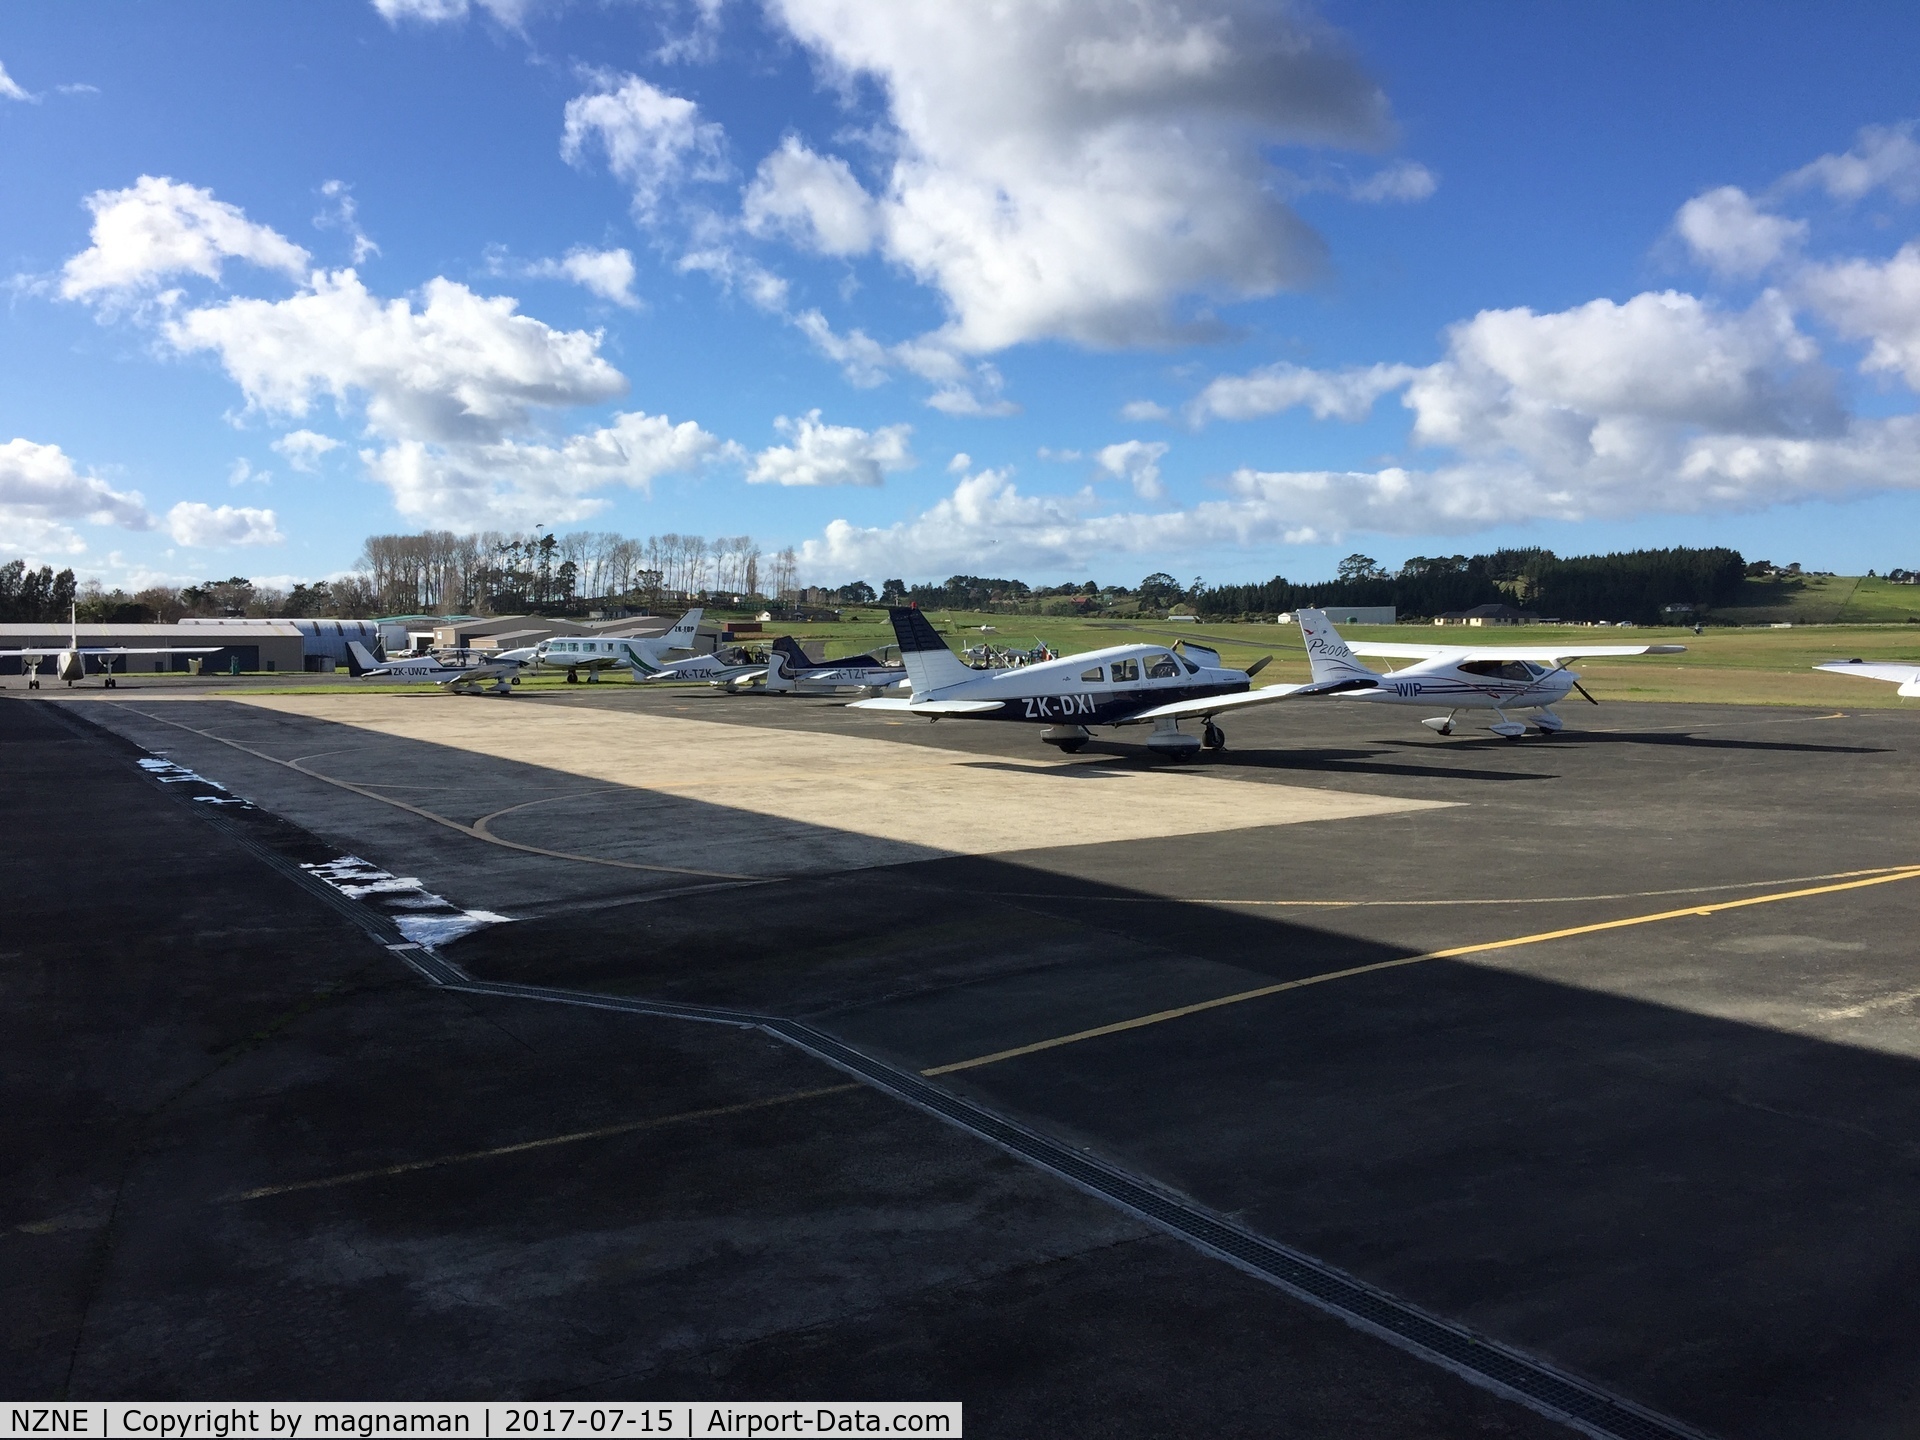 North Shore Aerodrome Airport, Auckland New Zealand (NZNE) - apron view